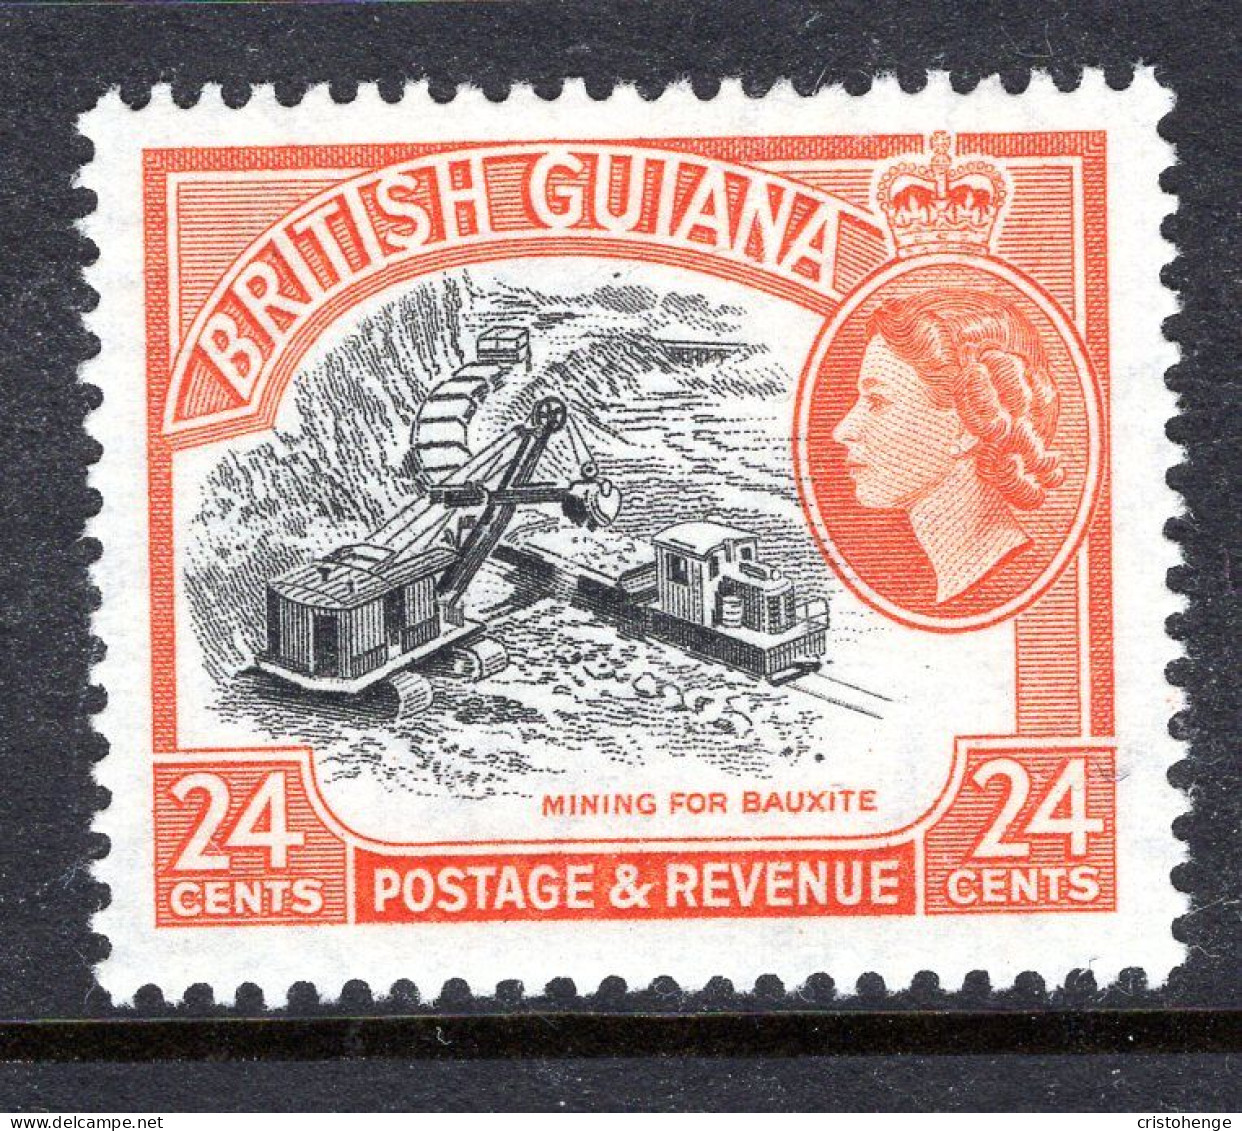 British Guiana 1954-63 QEII Pictorials - 24c Mining Bauxite - Orange - LHM (SG 339a) - Brits-Guiana (...-1966)